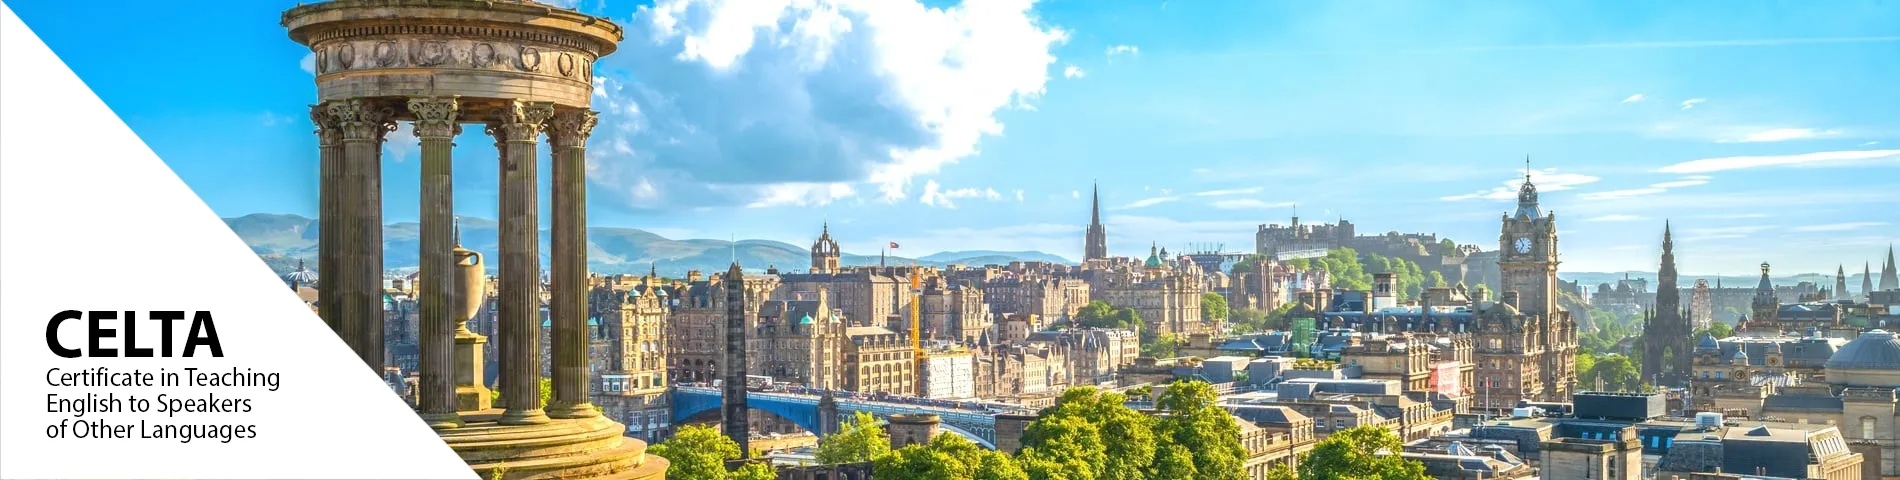 Edinburgh - 